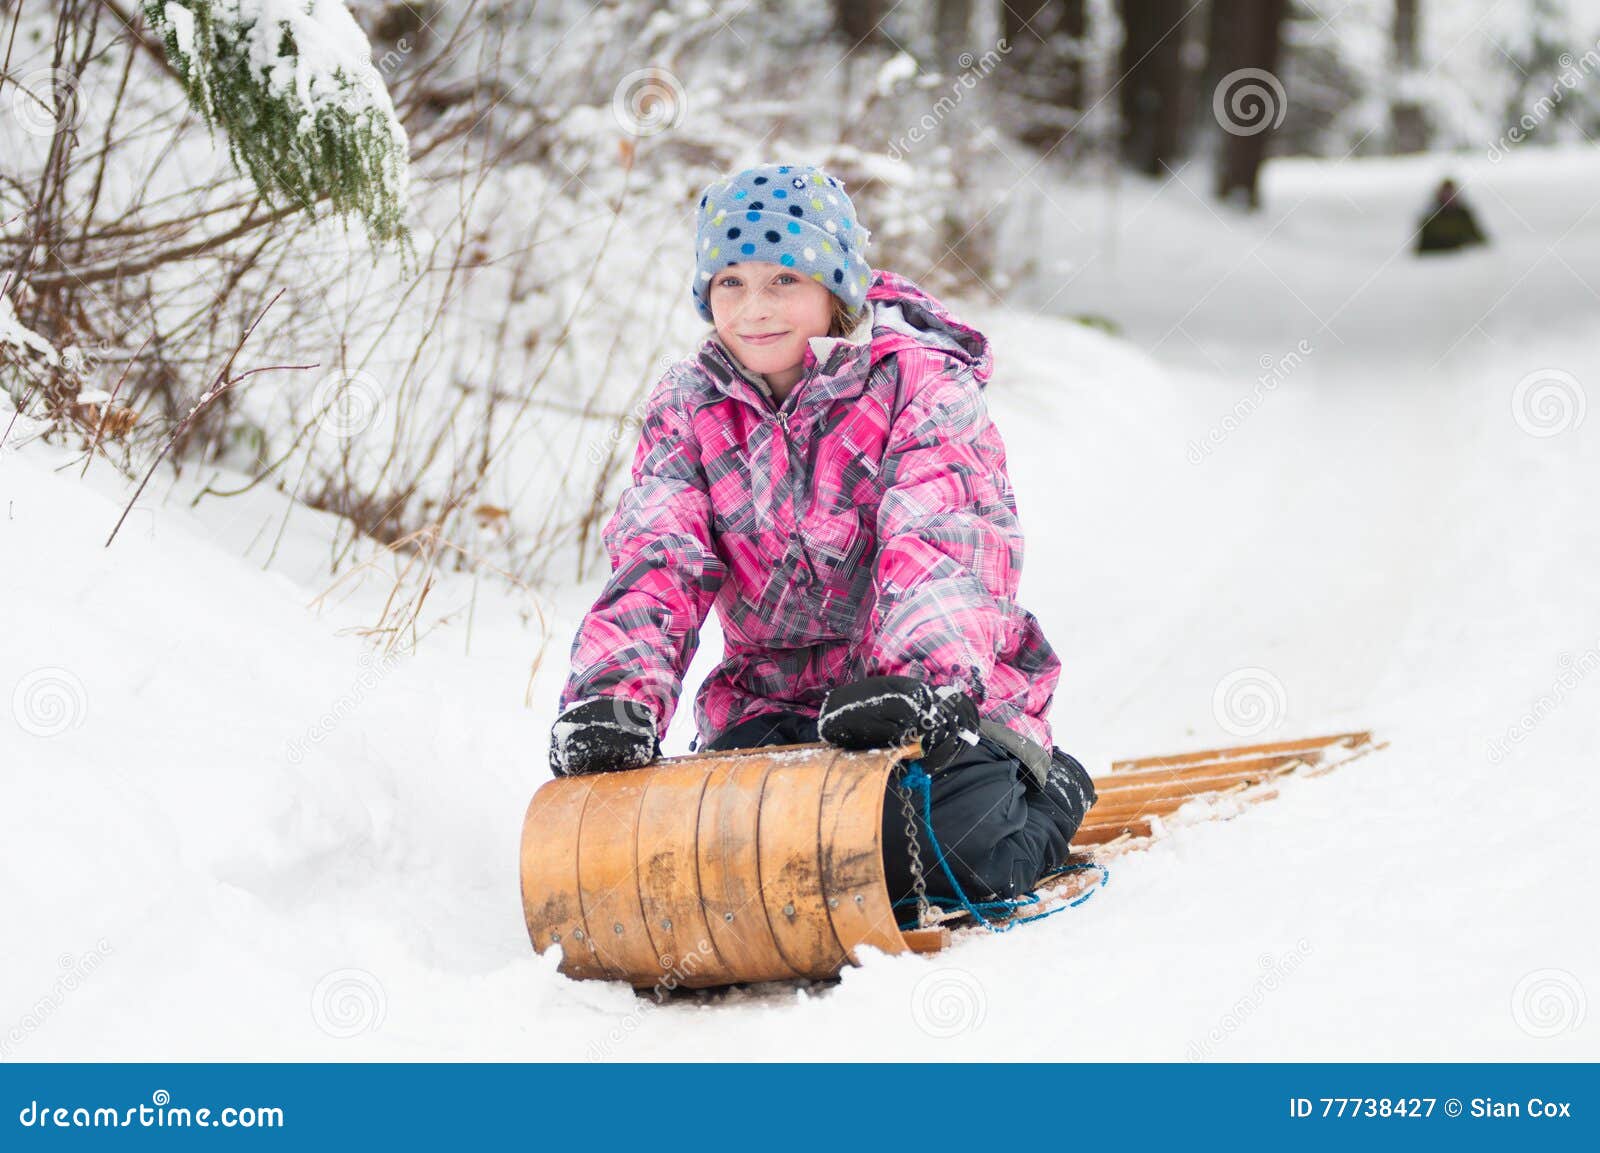 Wooden Toboggan Plans DIY Snow Traditional Sled Downhill Sledding Winter Sports 